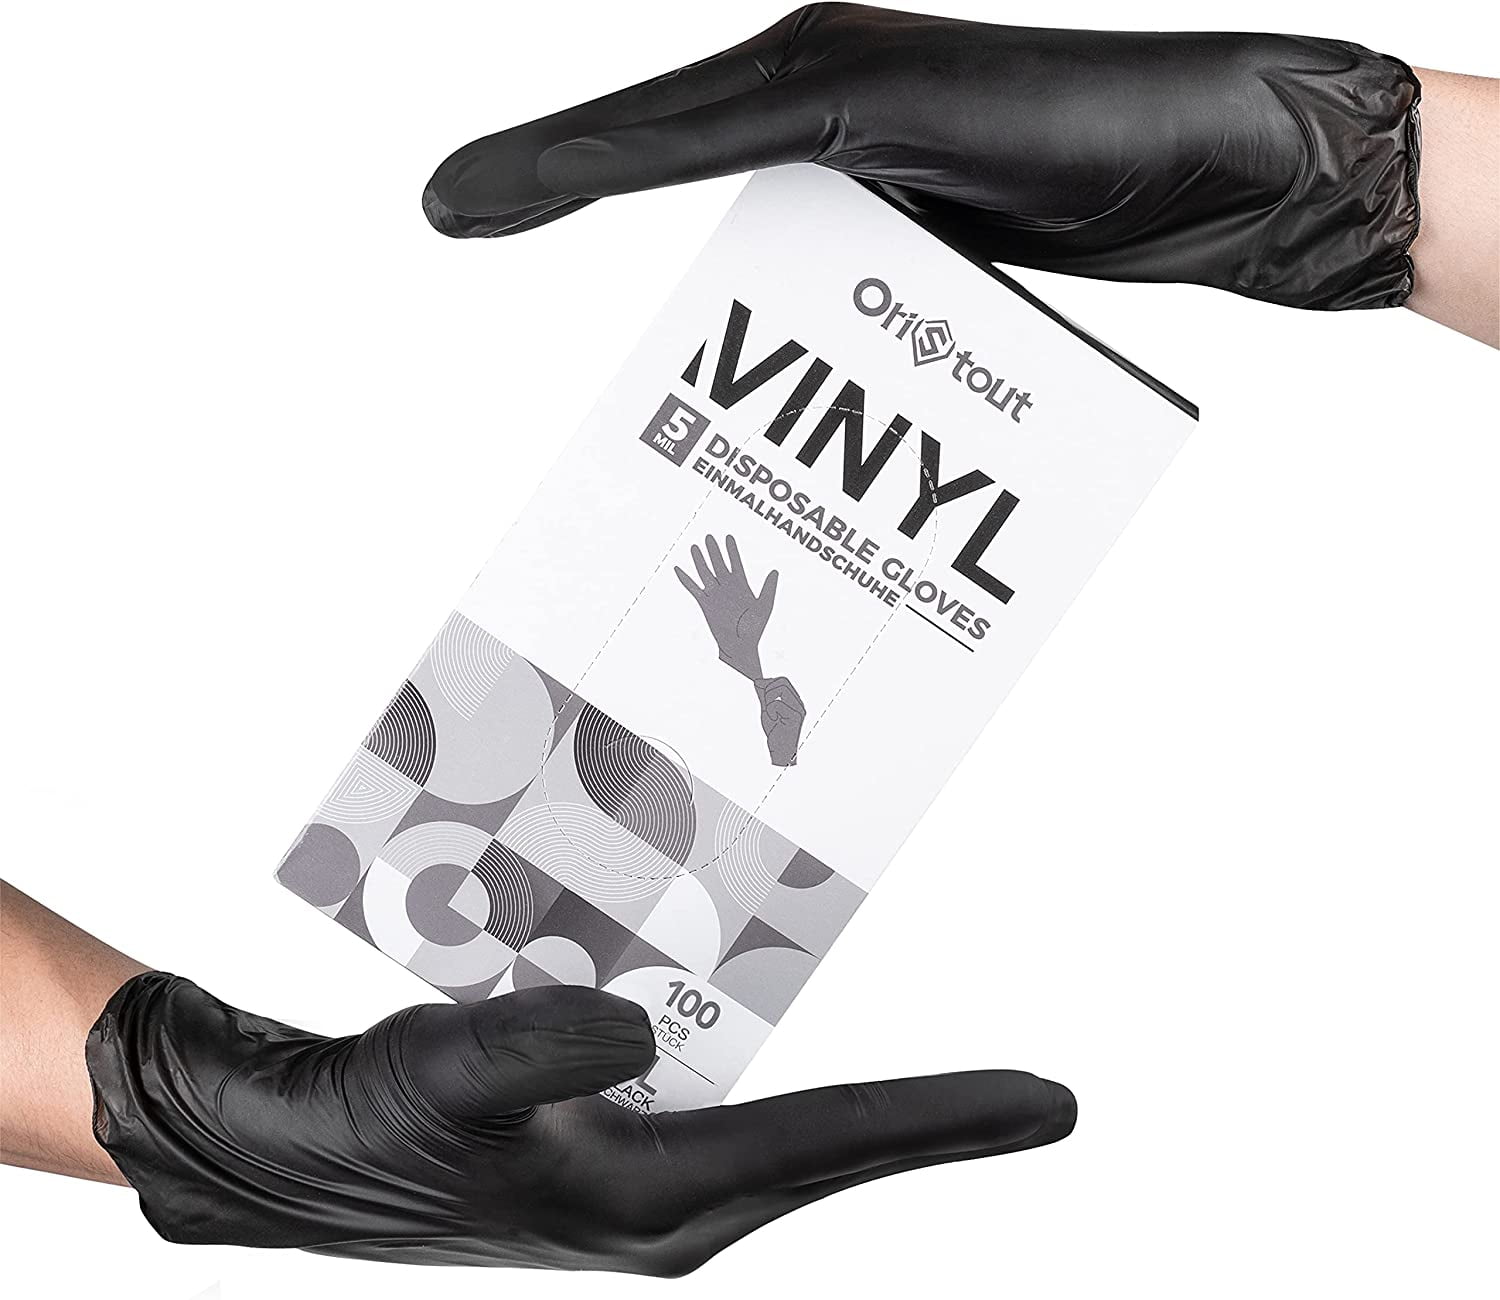 Gorilla Black Vinyl Disposable Gloves-Large